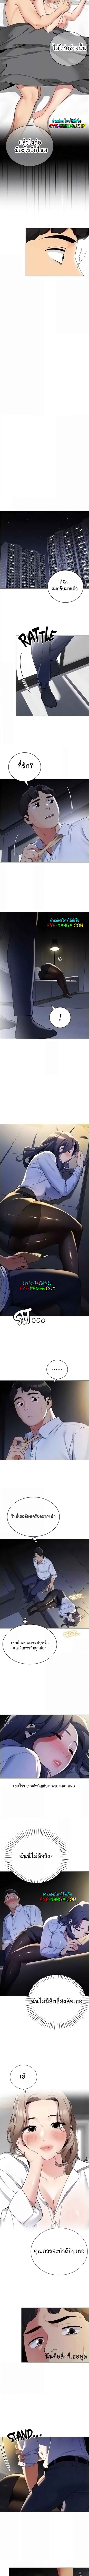 manga sugoi.com